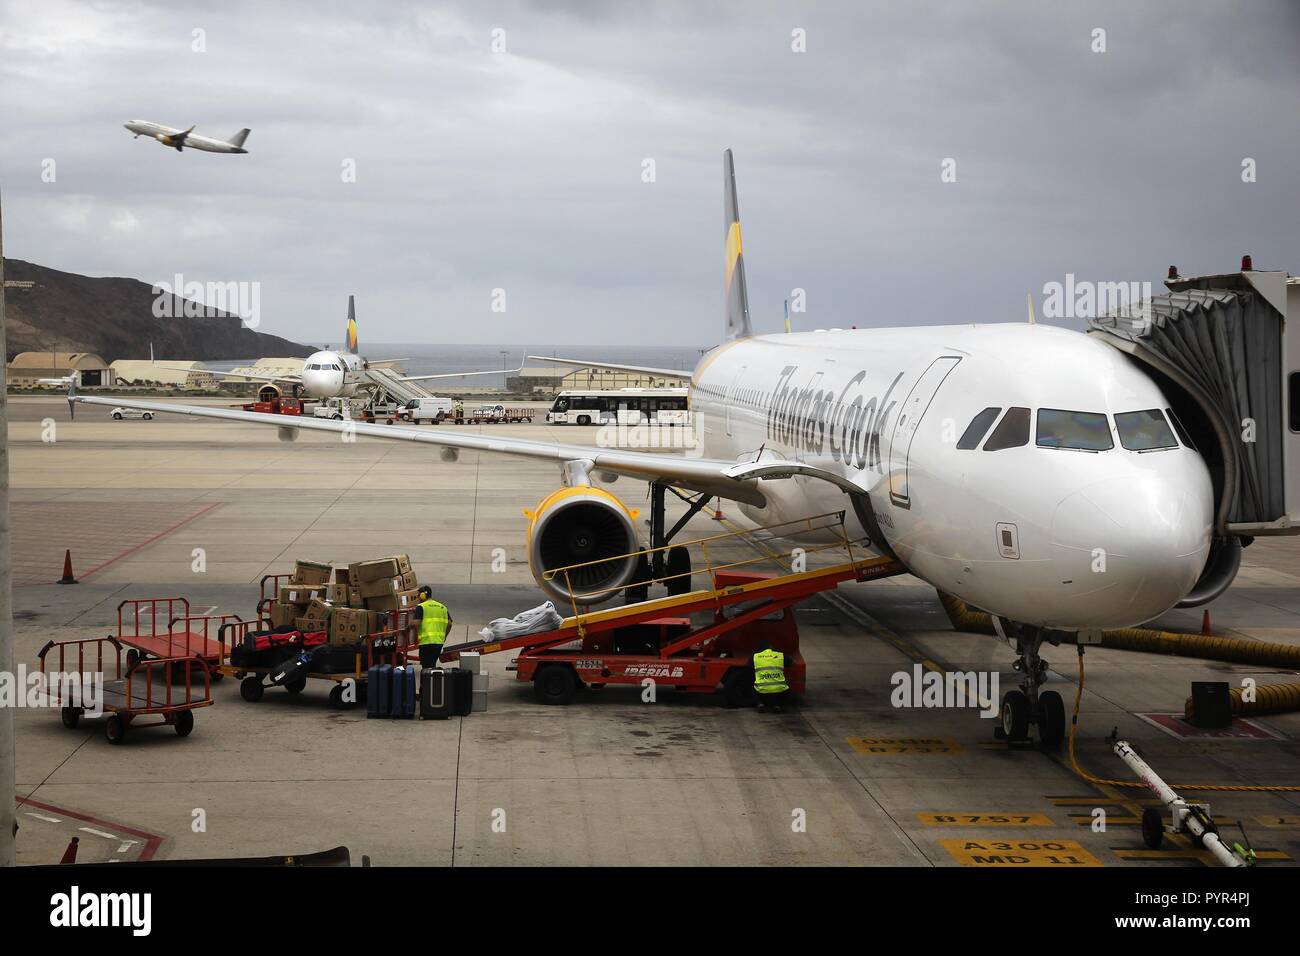 GRAN CANARIA, Spagna - 27 novembre 2015: Thomas Cook Airbus A321 parcheggiato a Las Palmas Aeroporto di Gran Canaria, Spagna. Las Palmas Airport aveva 12 millio Foto Stock